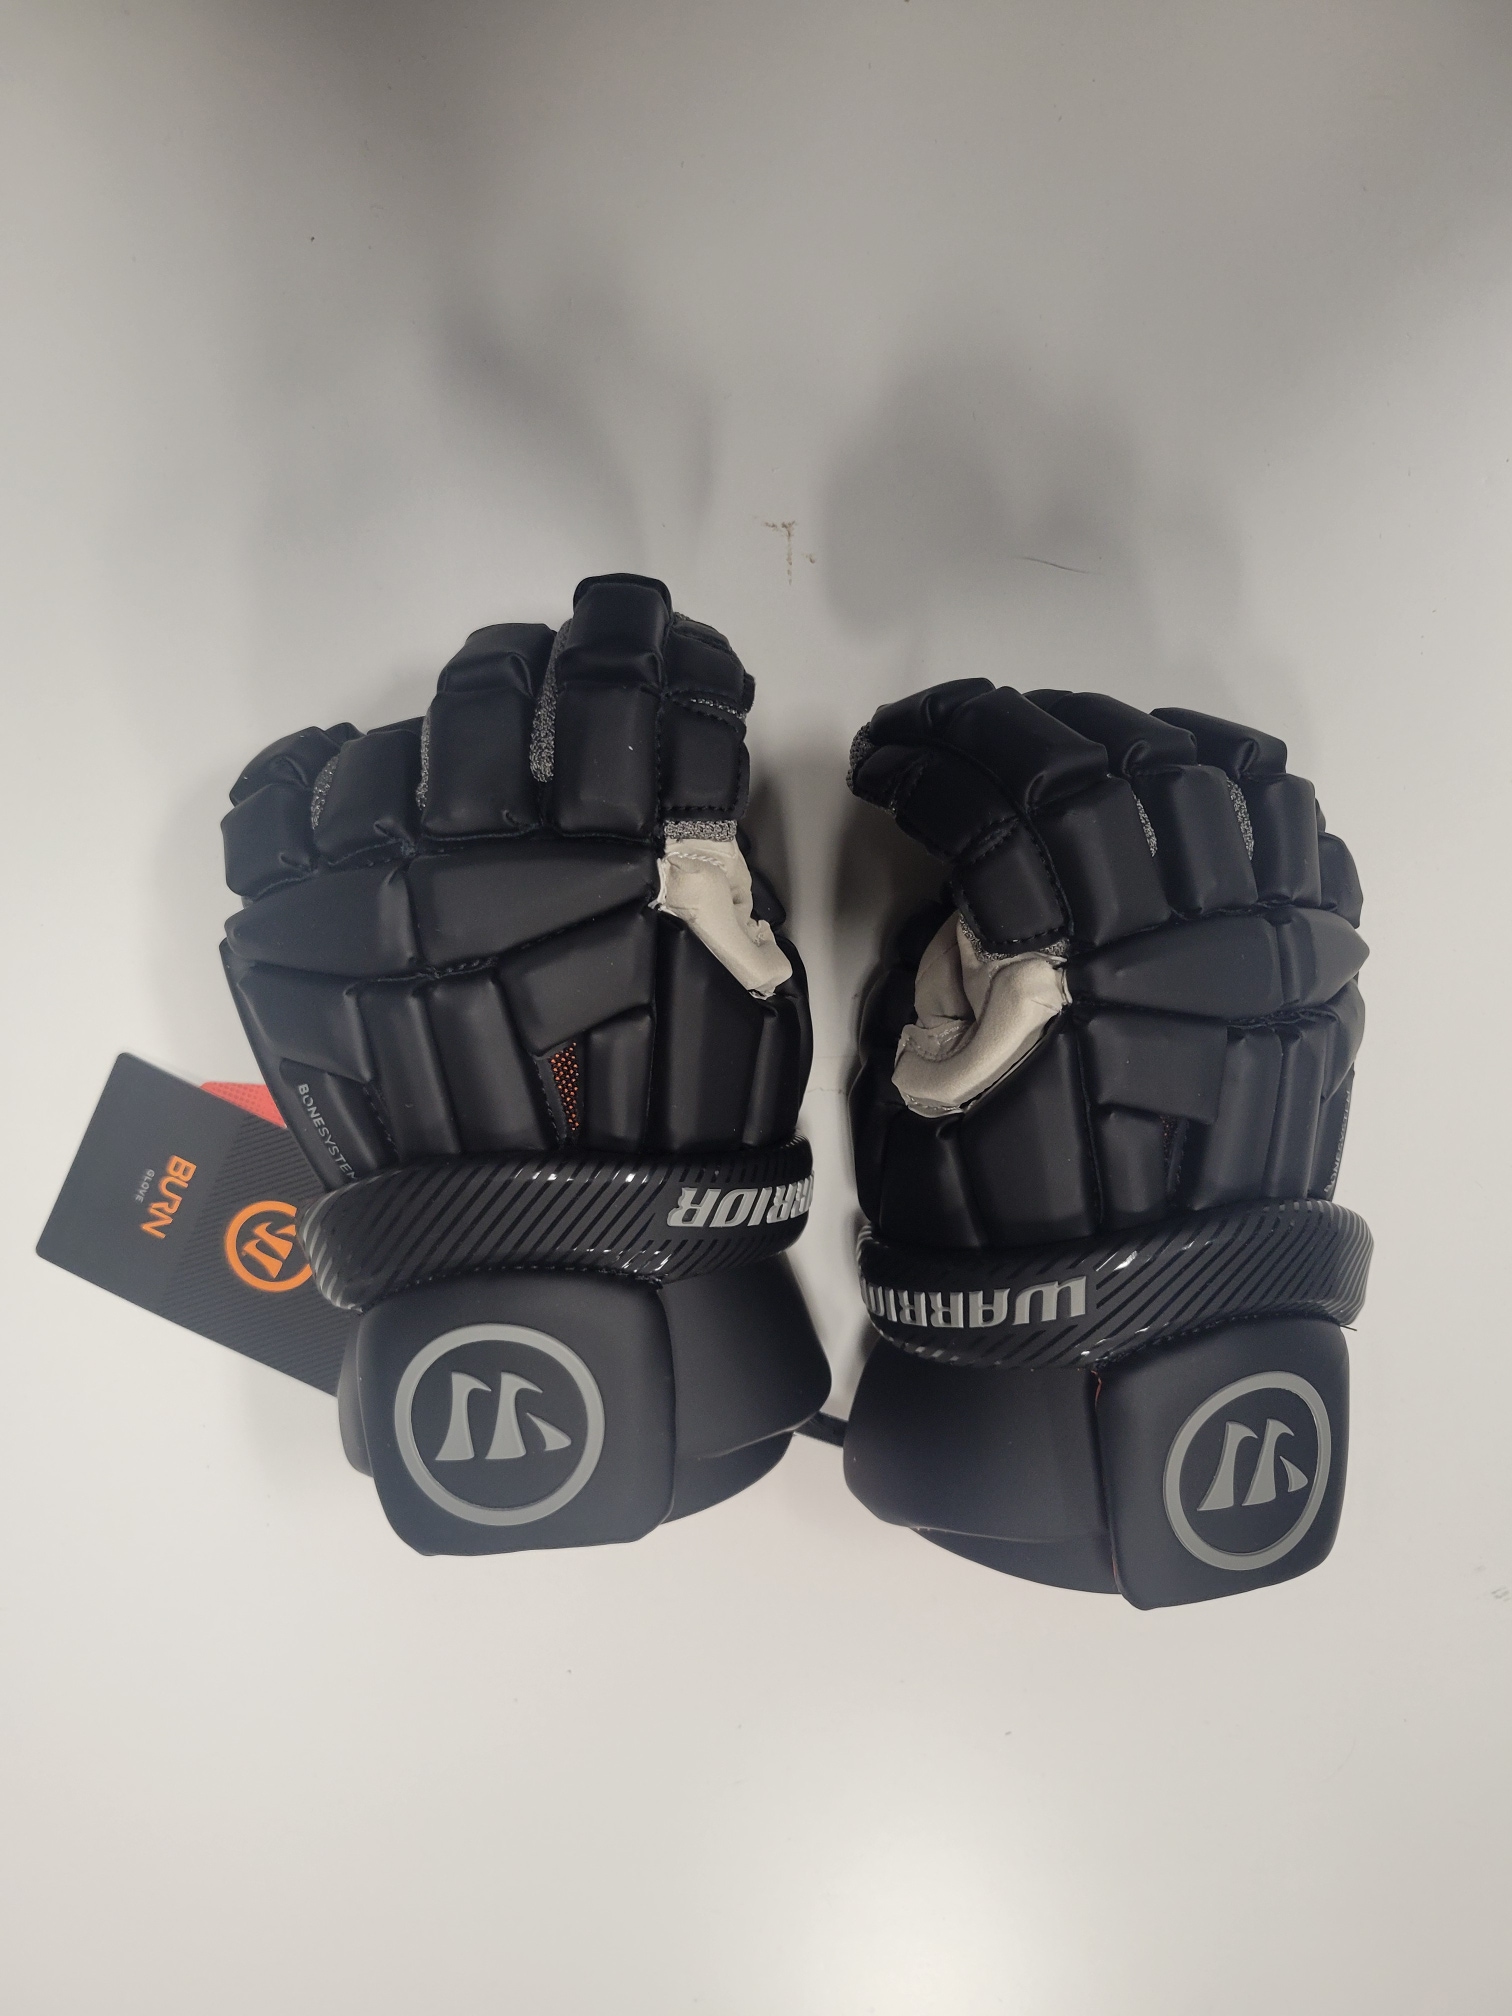 New Warrior Burn Lacrosse Gloves Large Black - 23' Model